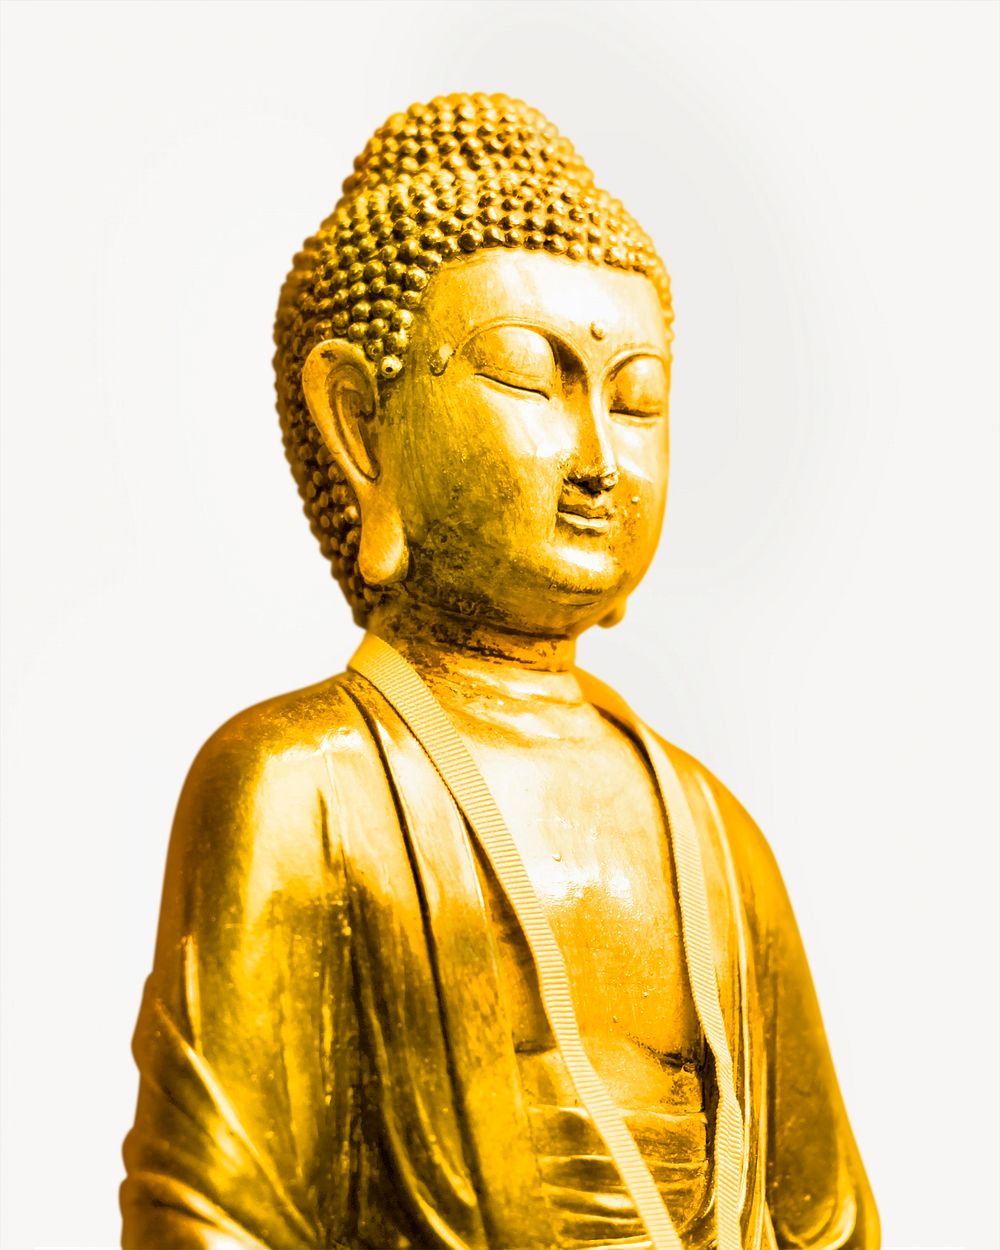 Buddha statue, Buddhism religion sculpture